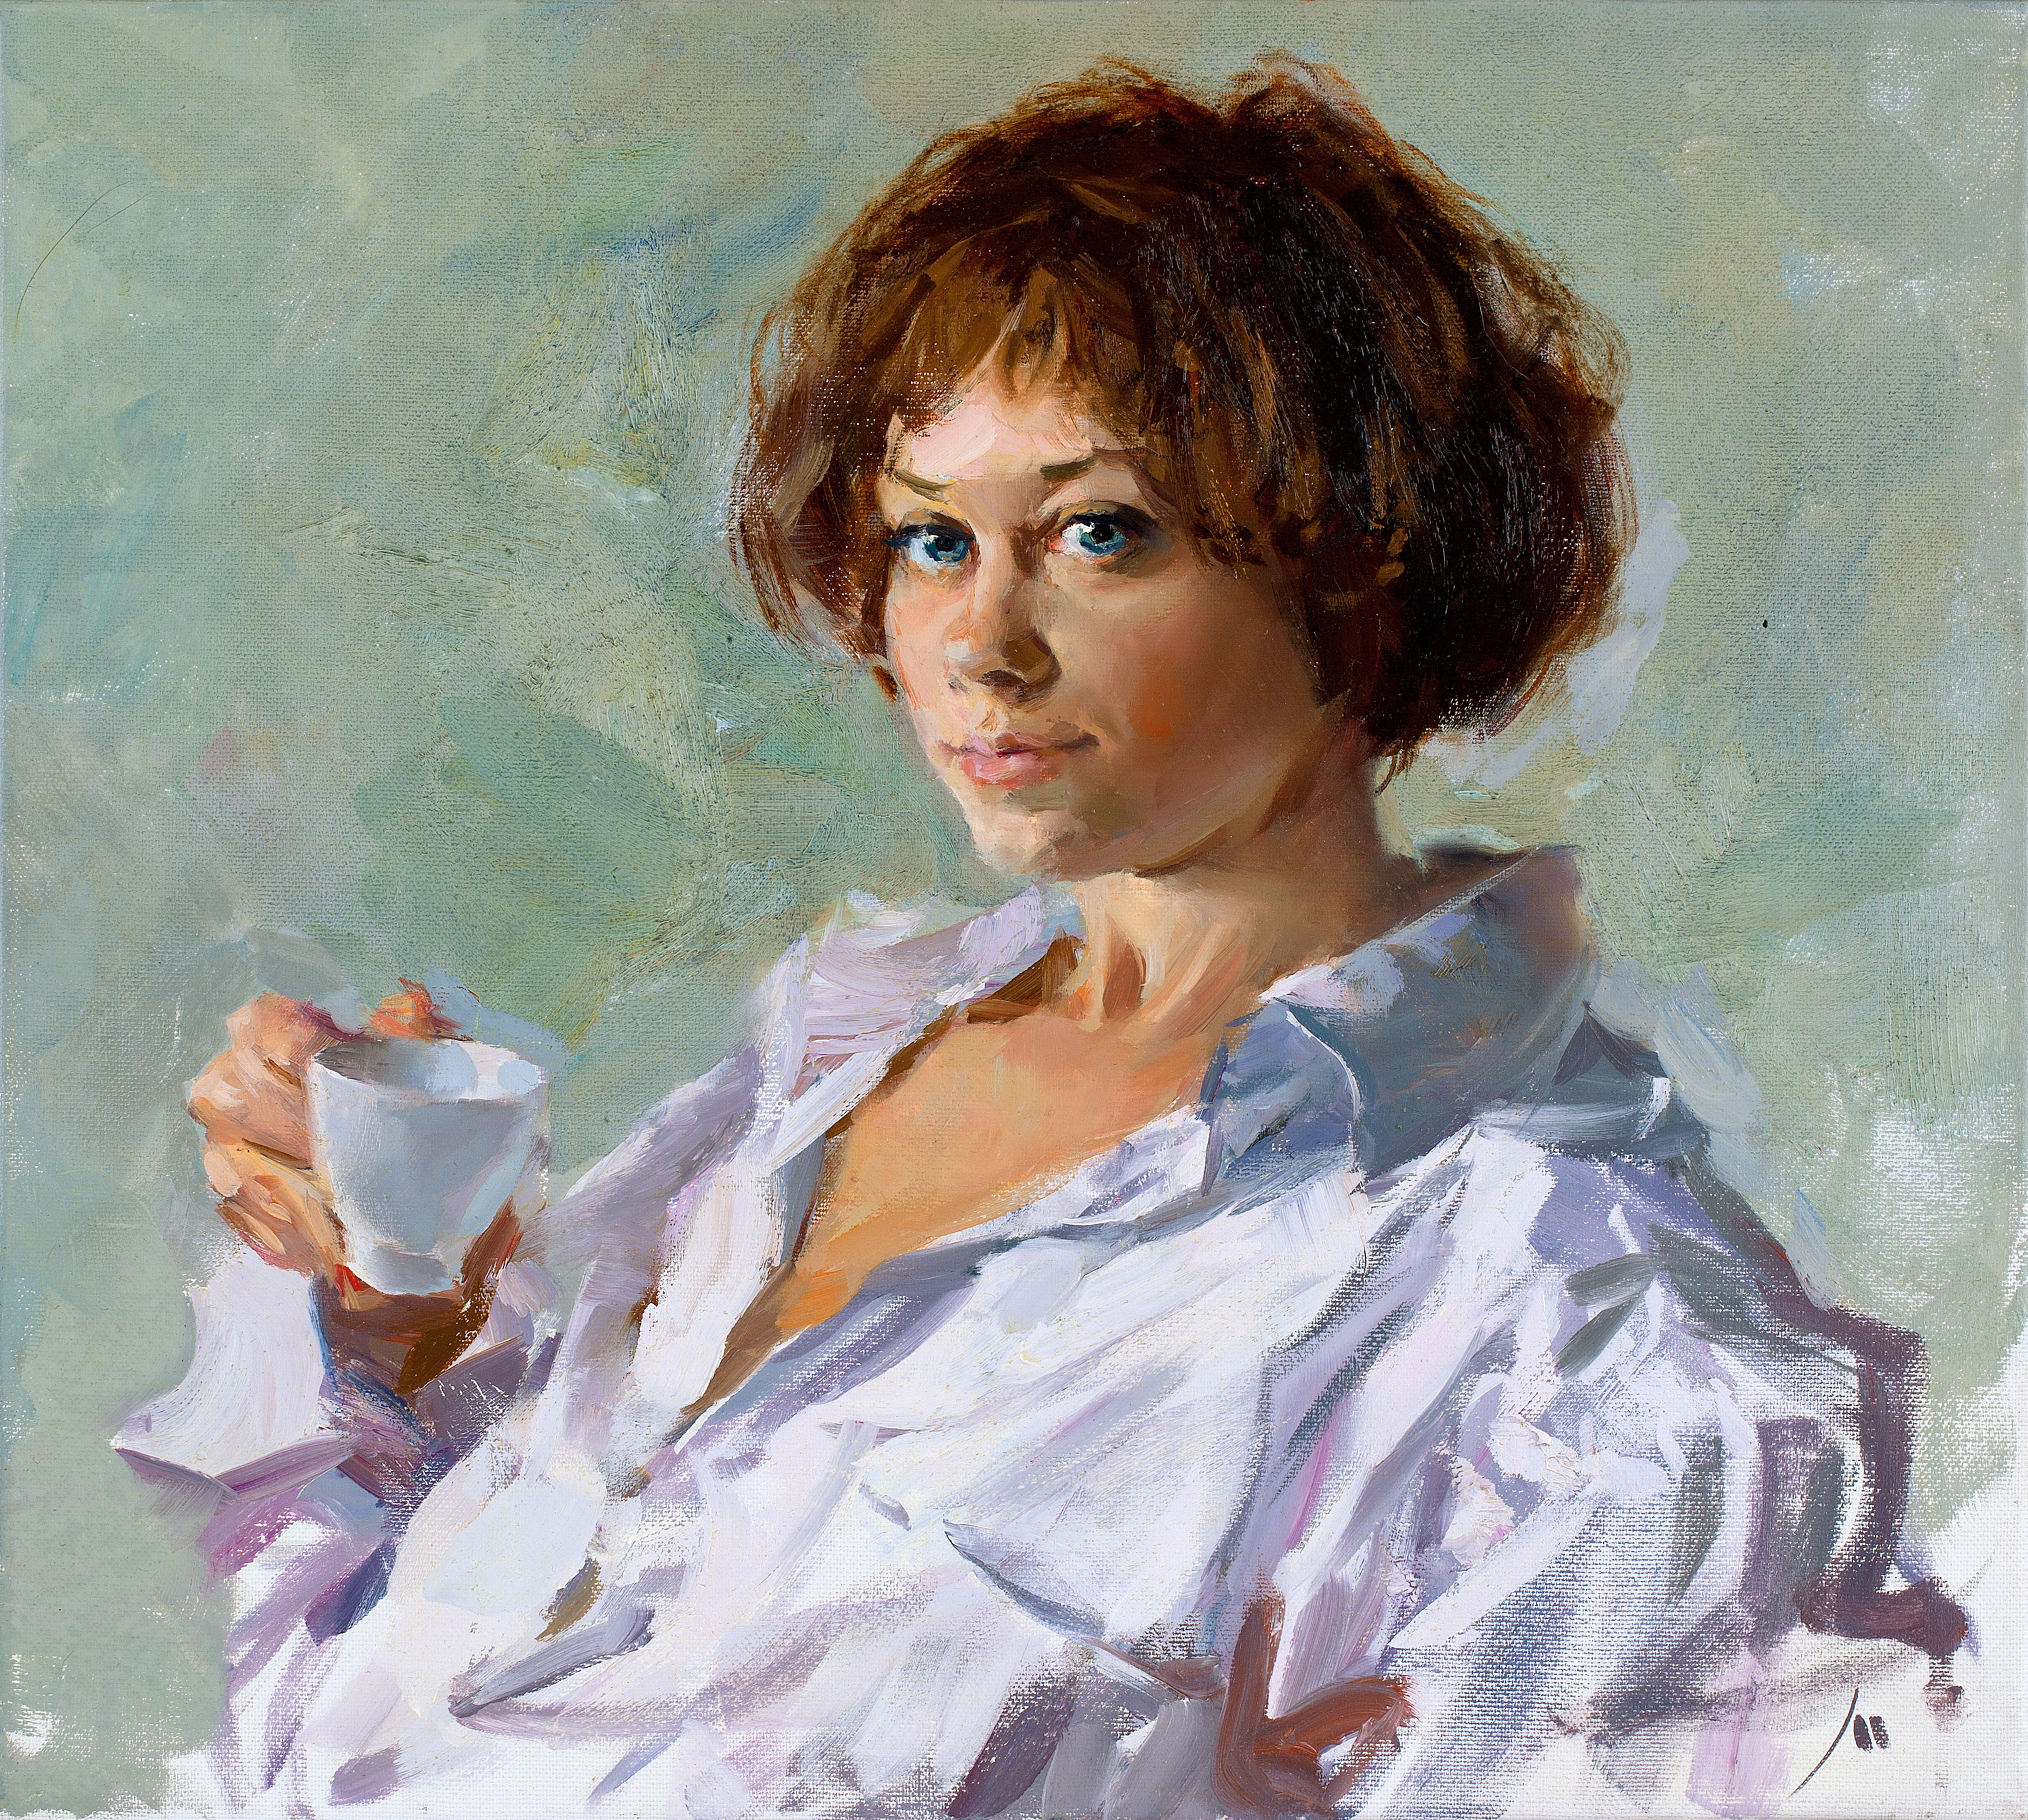 Evgeniy Monahov Portrait Painting - Morning coffee with Julia